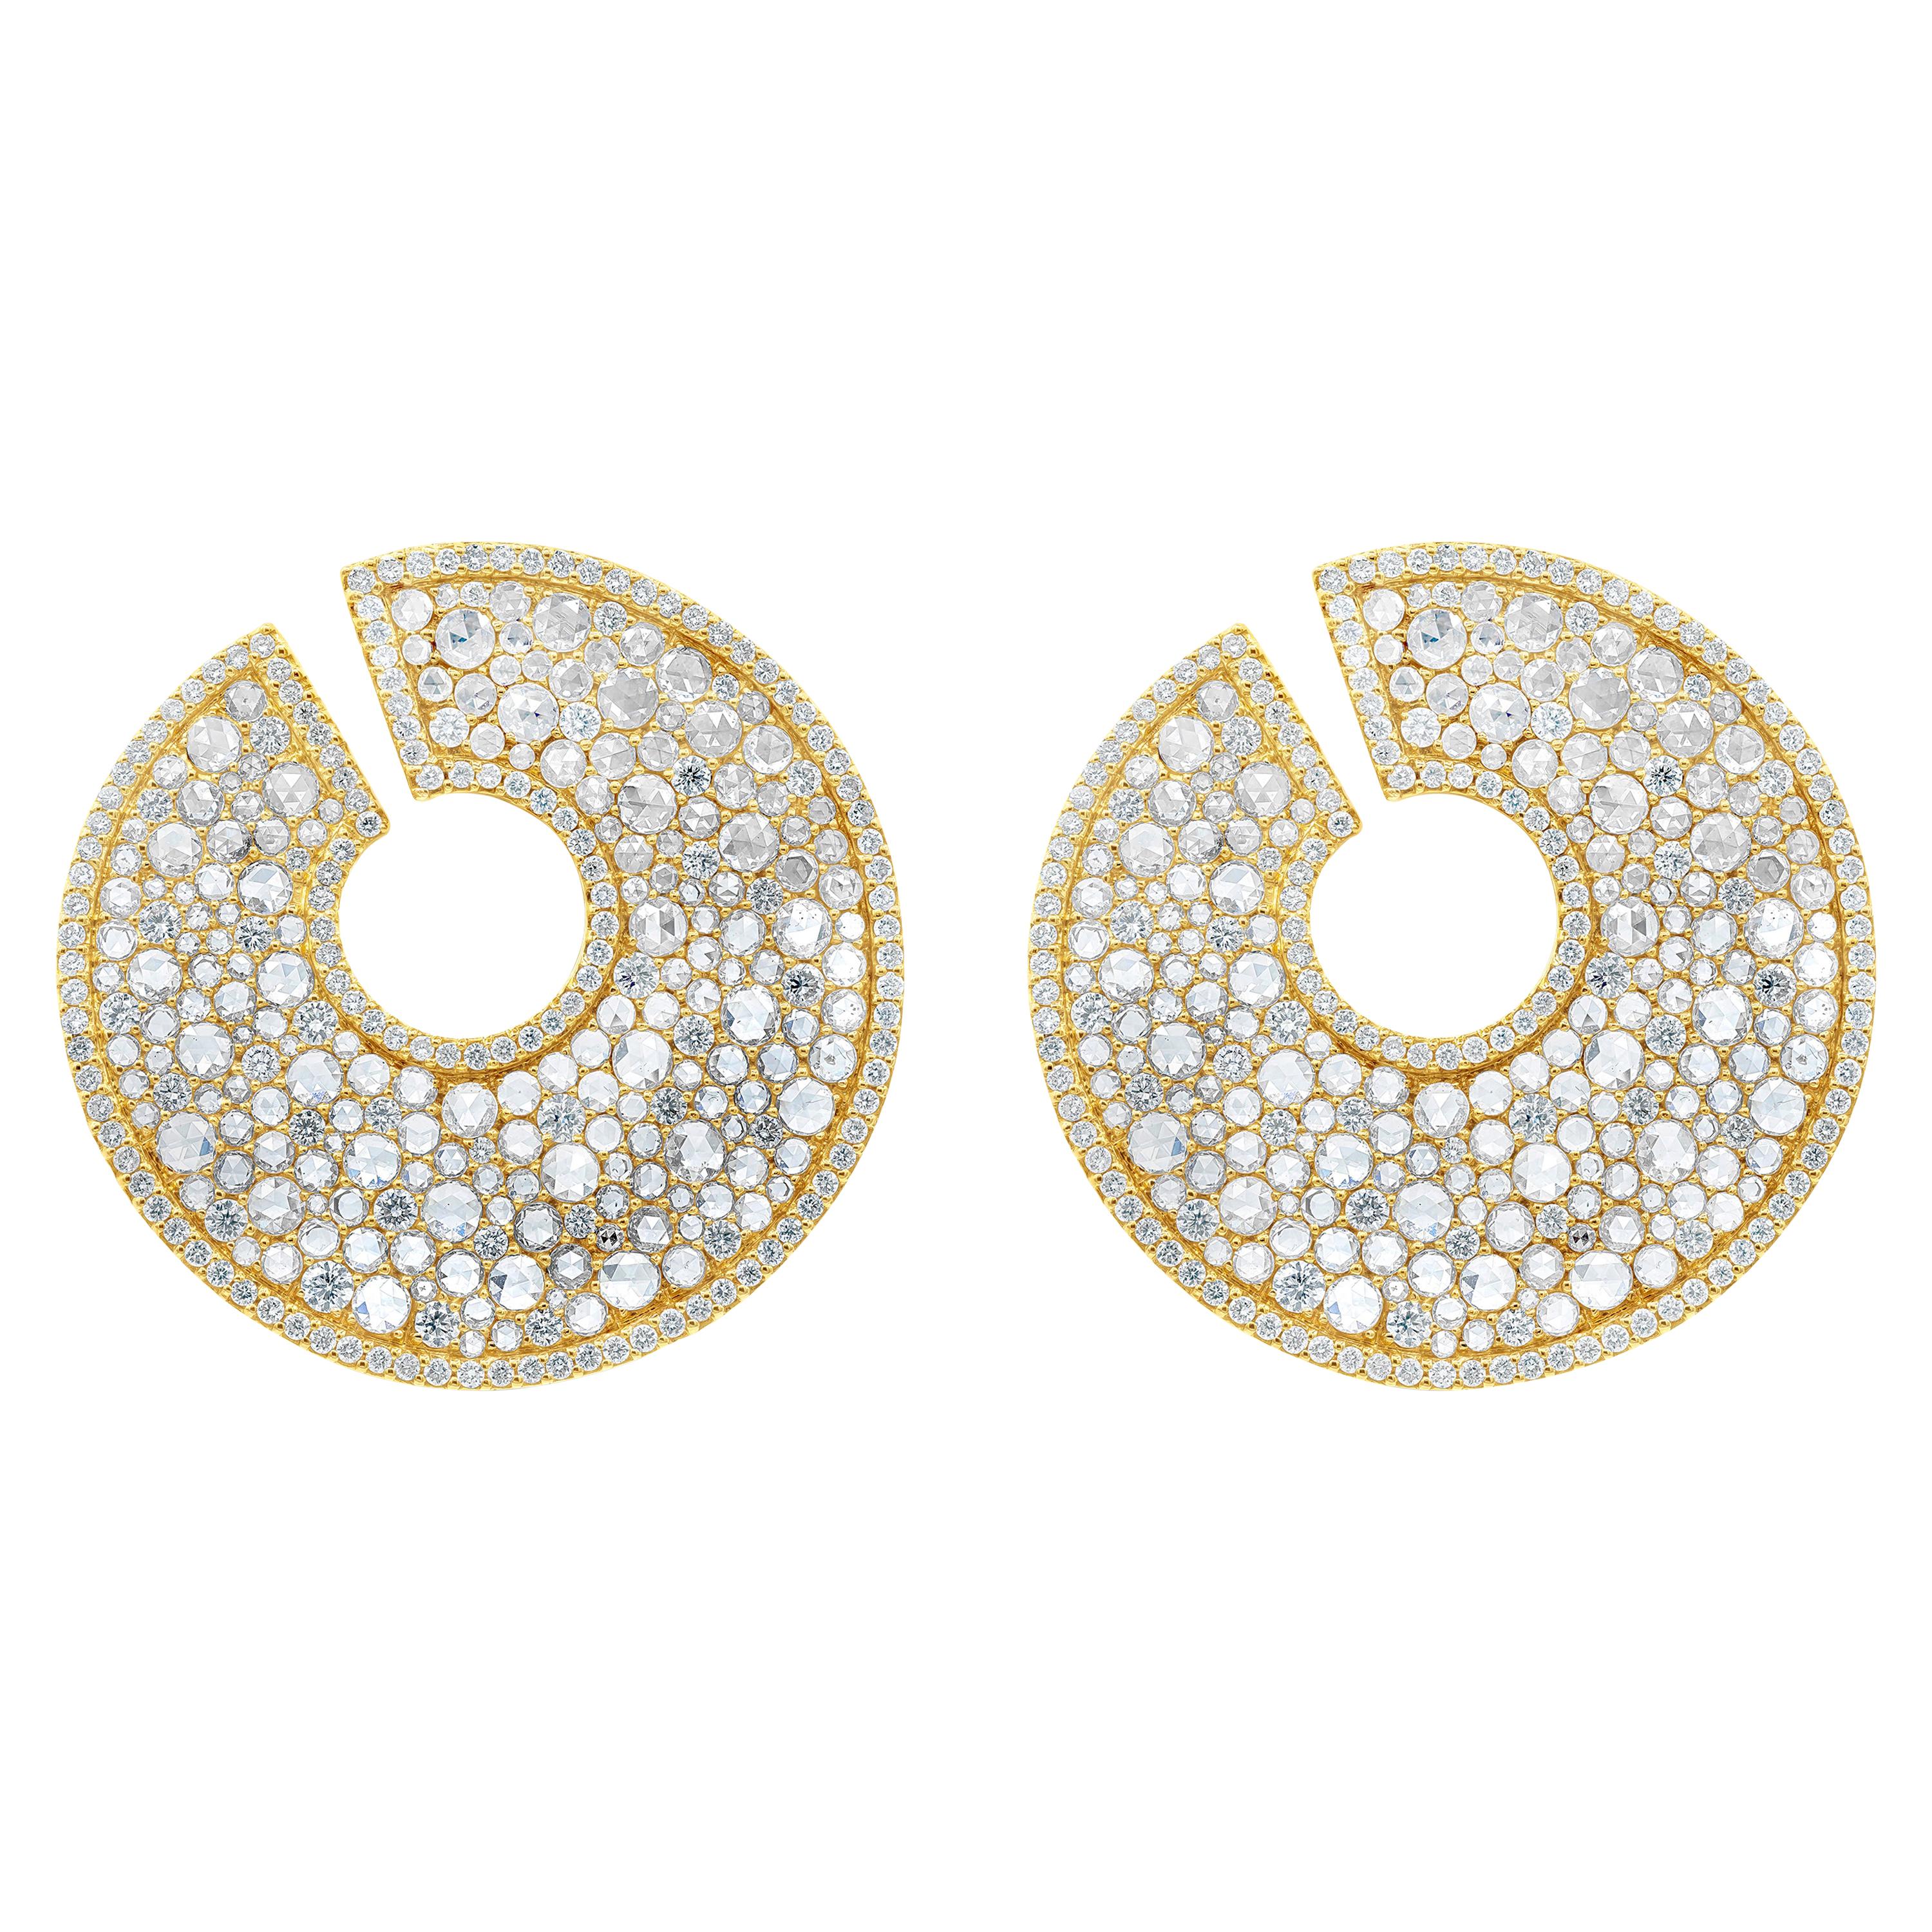 Roman Malakov 14.19 Carats Total Mixed Cut Diamonds Circular Clip-on Earrings